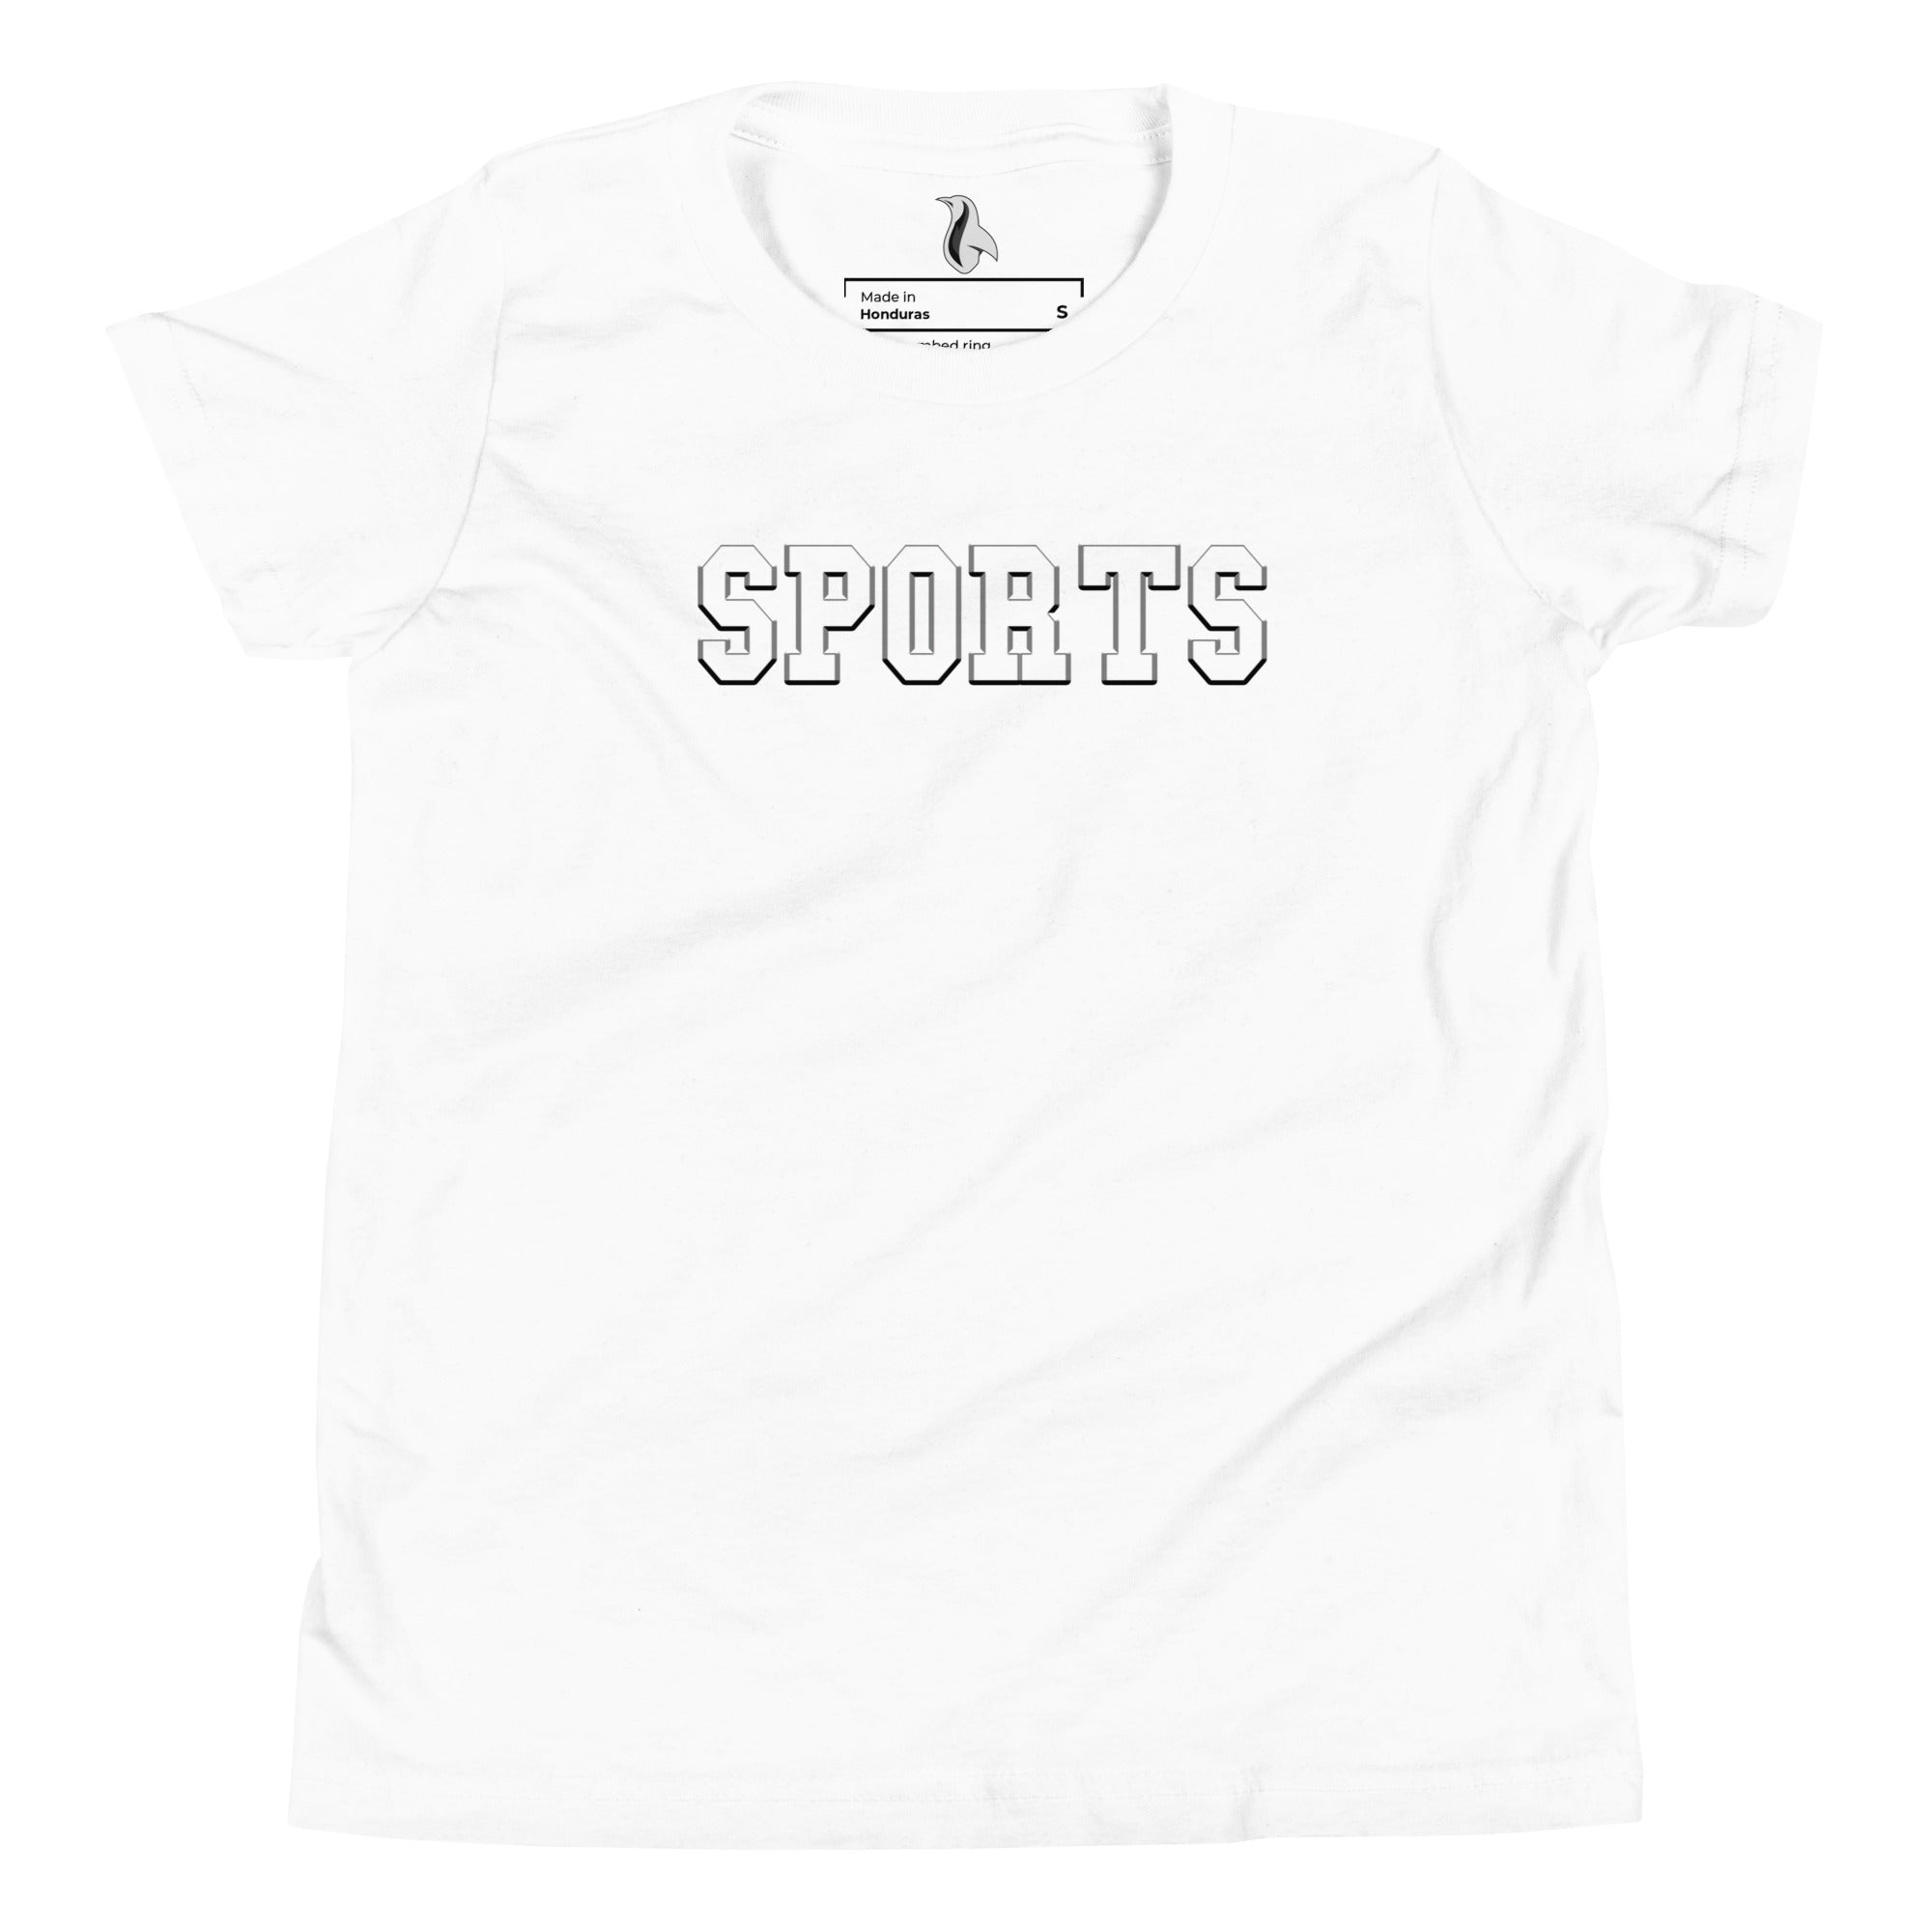 SPORTS! Youth Short Sleeve T-Shirt